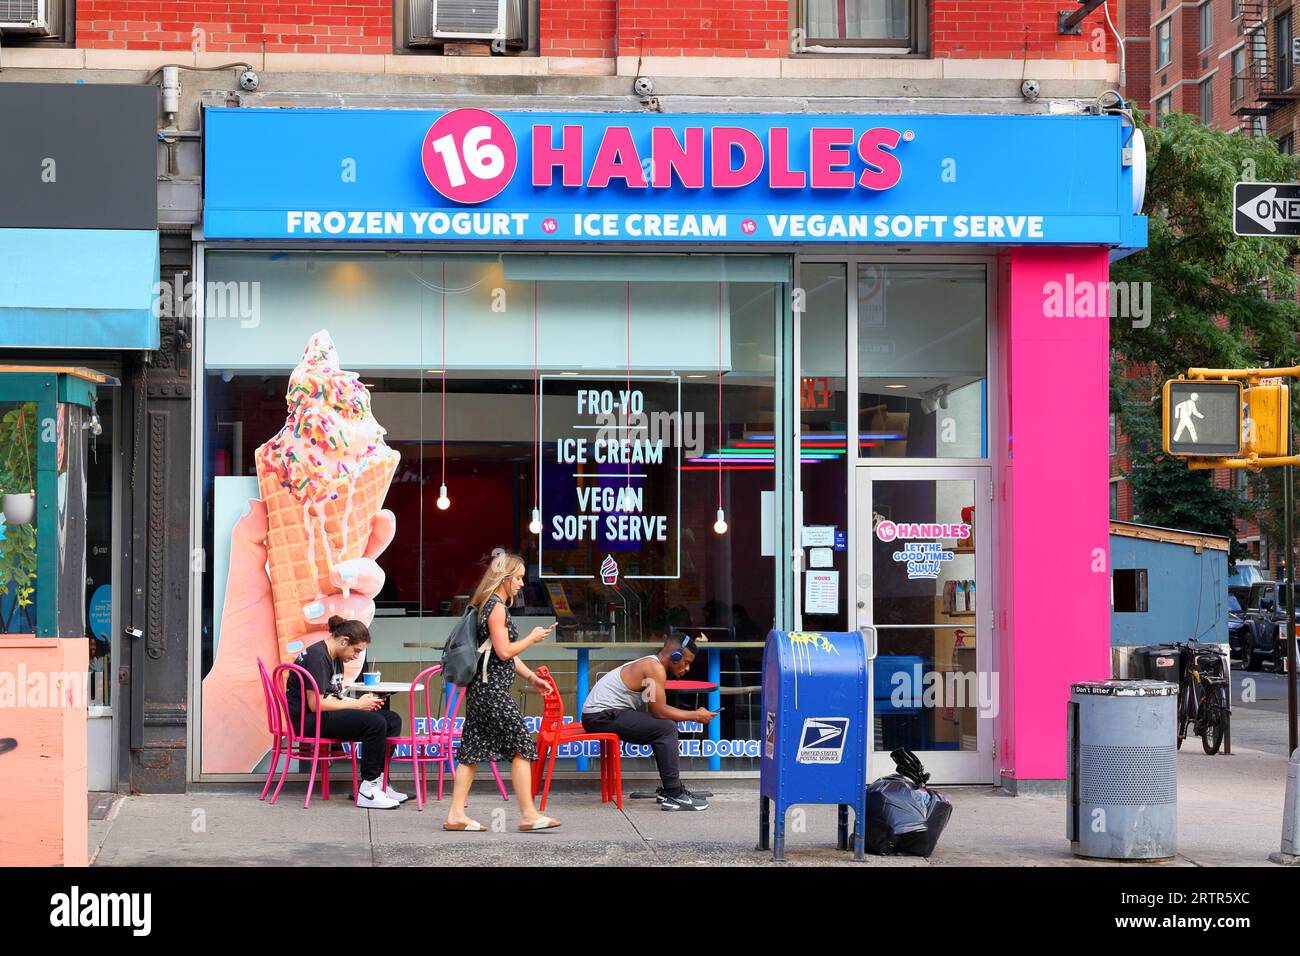 16 Handles, 178 8th Ave, New York. NYC storefront photo of a frozen yogurt shop and vegan soft serve in Manhattan's Chelsea neighborhood. Stock Photo